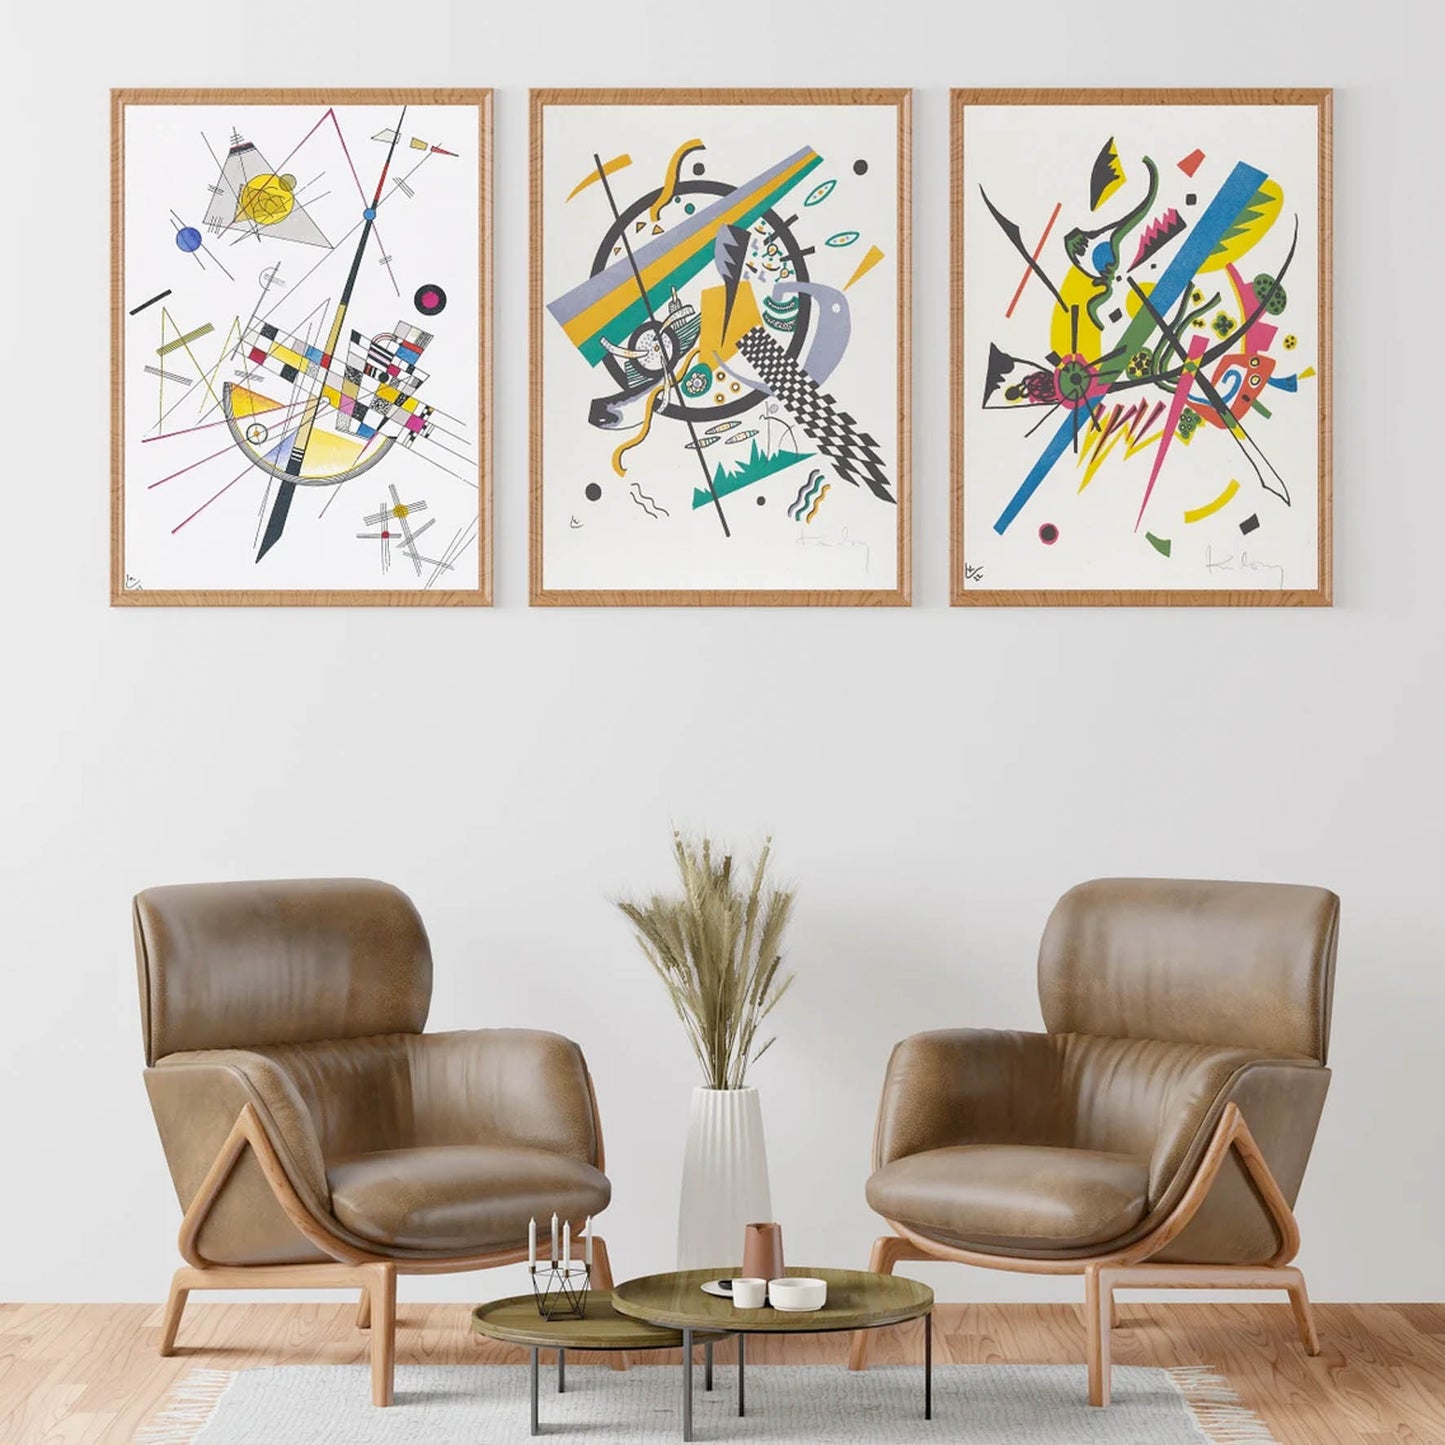 Arte Moderno abstracto - Wassily Kandinsky 138